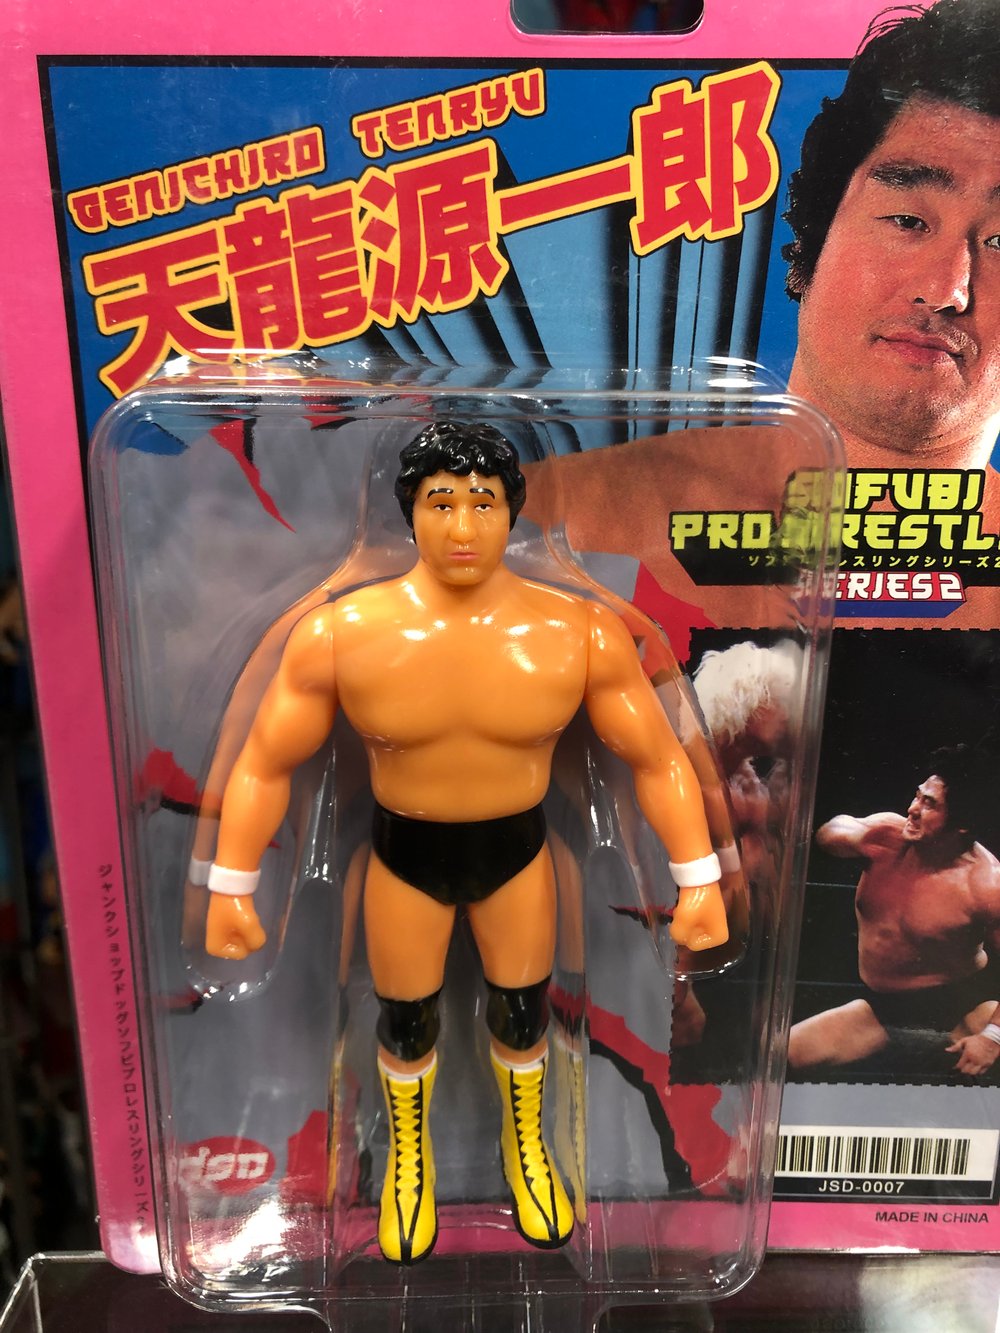 **IN STOCK** Junk Shop Dog Sofubi Vintage Style Genichiro Tenryu  Wrestling Figure  